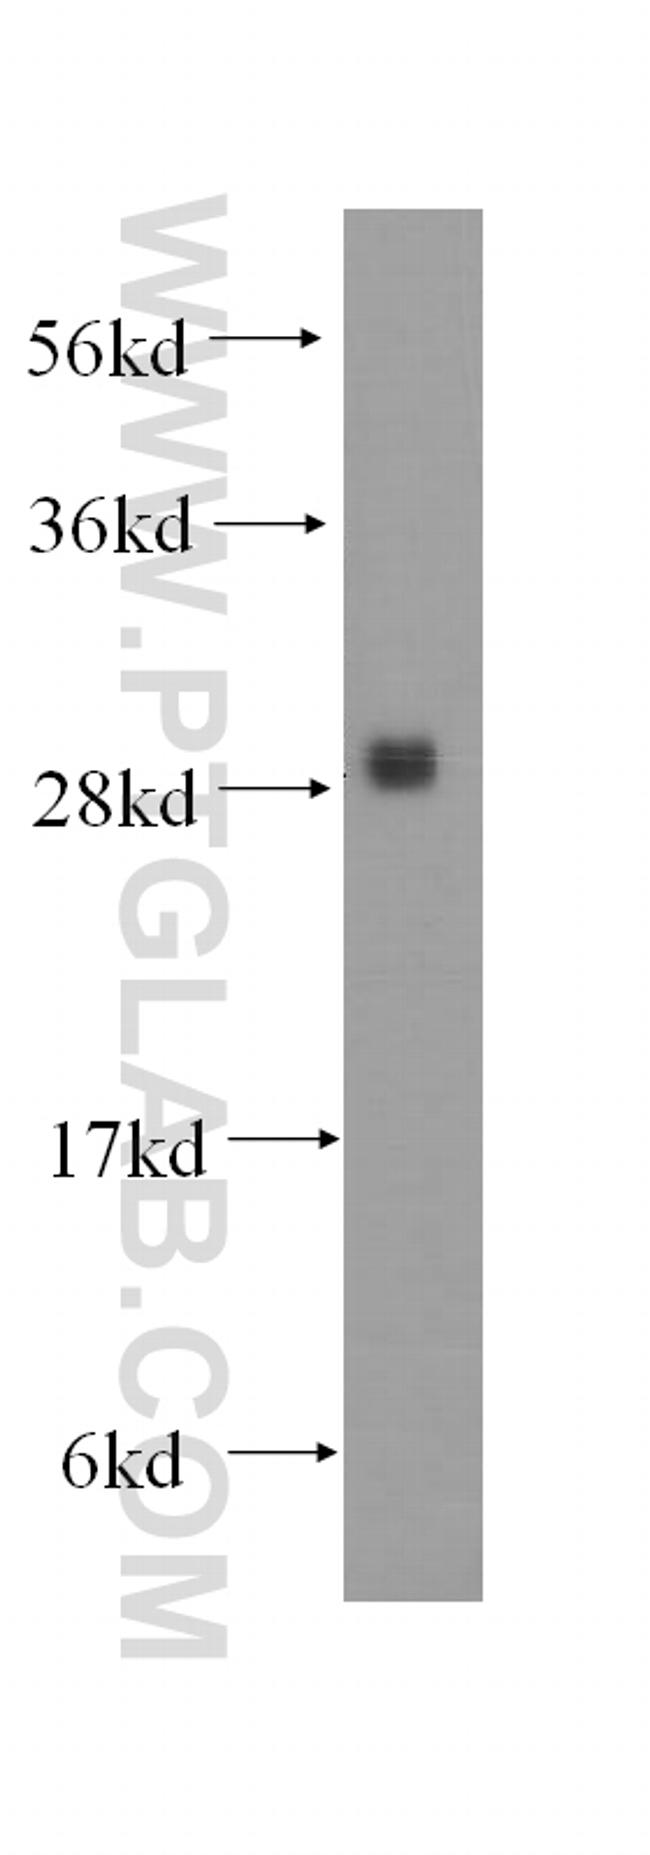 PMM1 Antibody in Western Blot (WB)